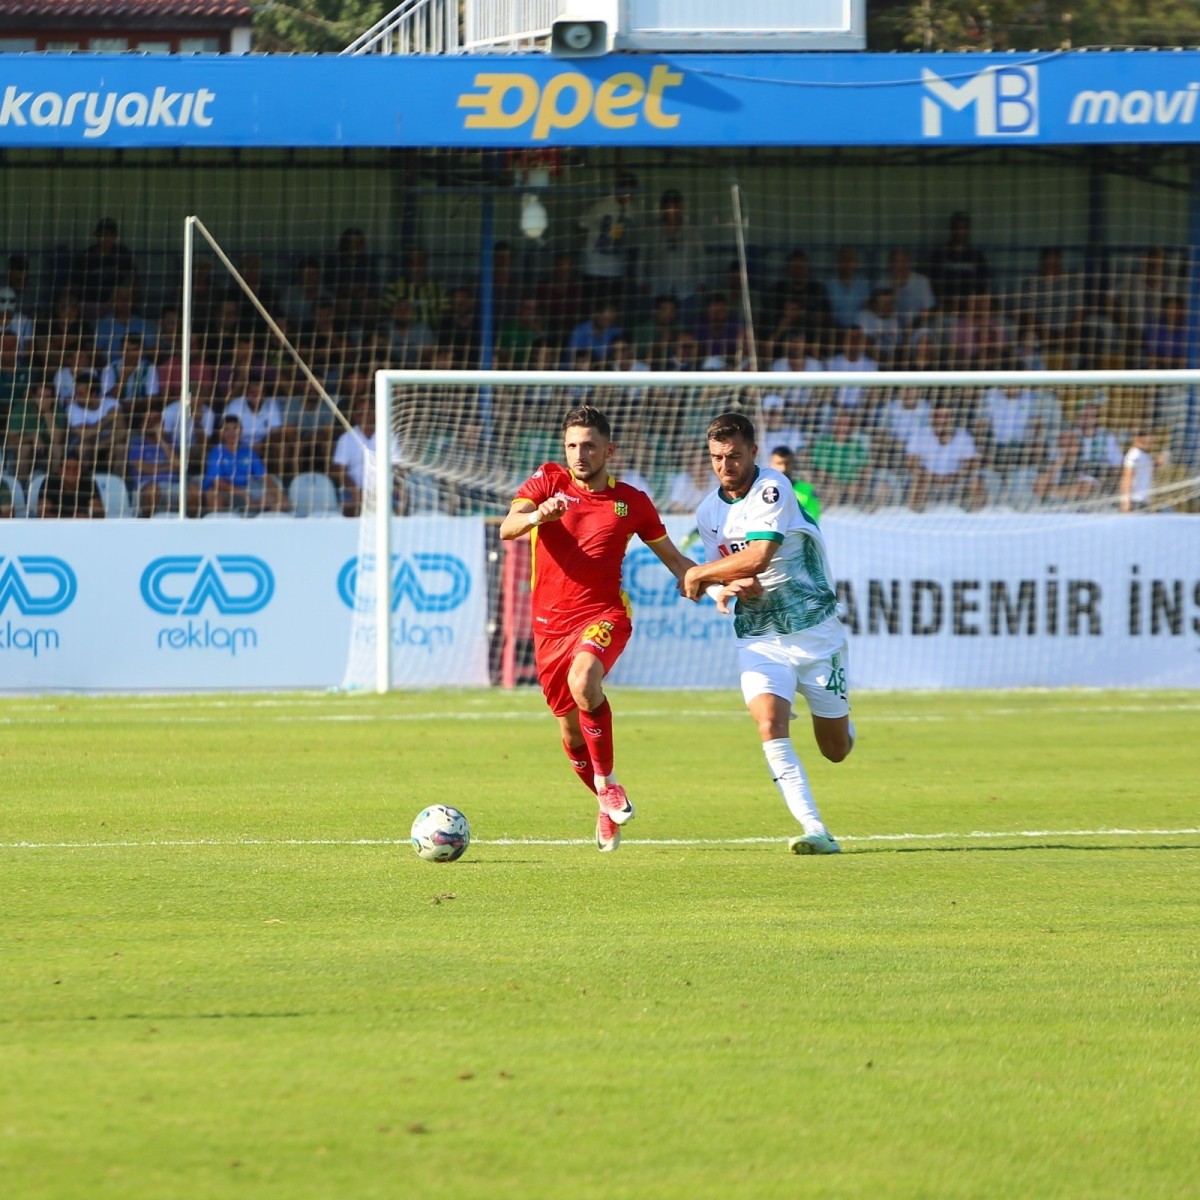 Yeni Malatyaspor'un kötü performansı, ilk haftadan taraftarları düşündürdü